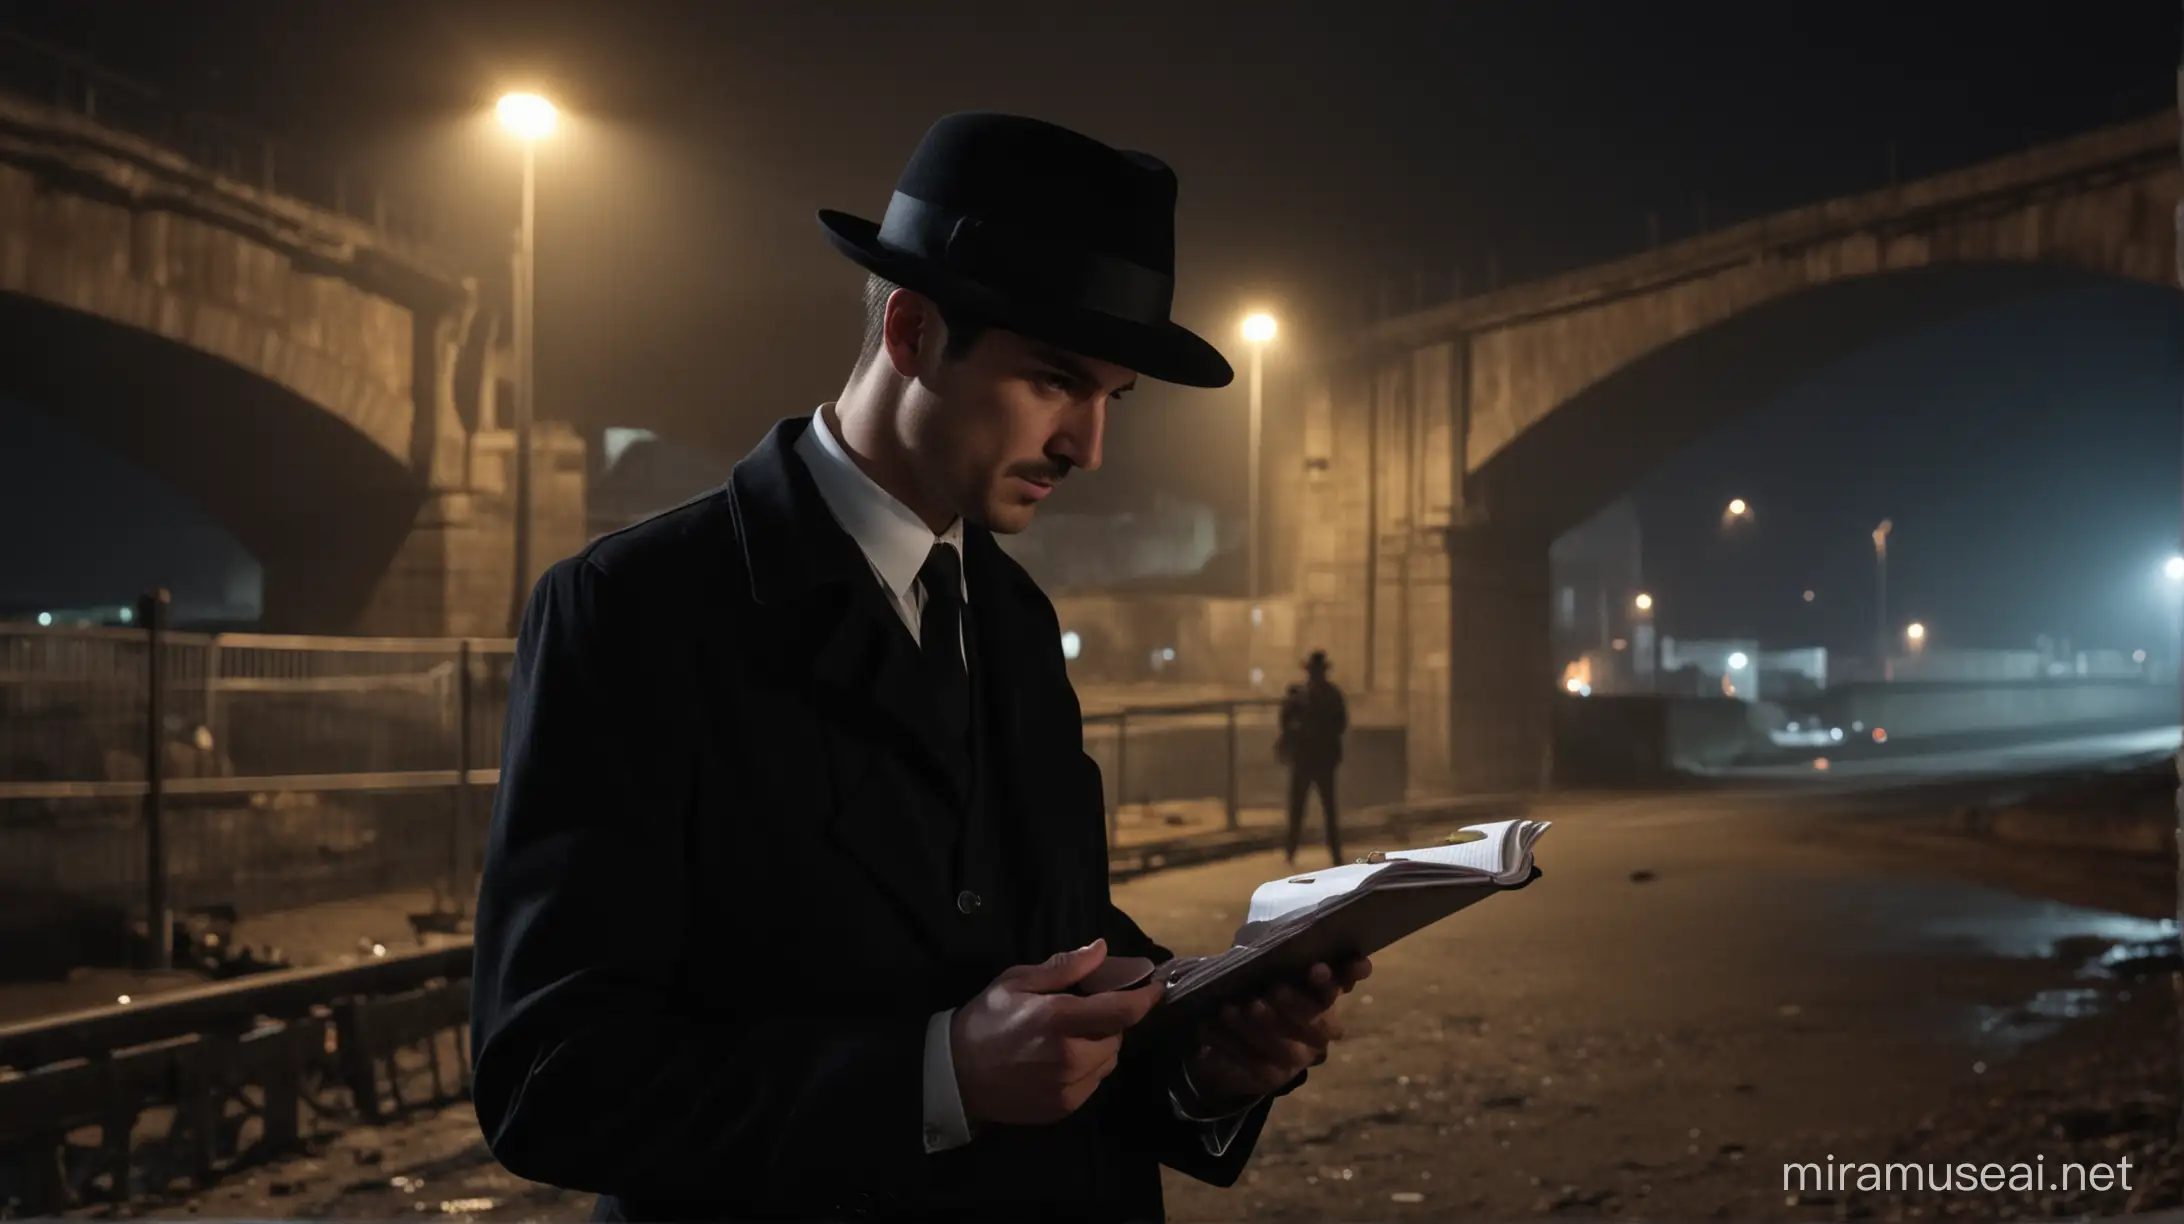 Night Detective with Black Hat Investigating Under Bridge